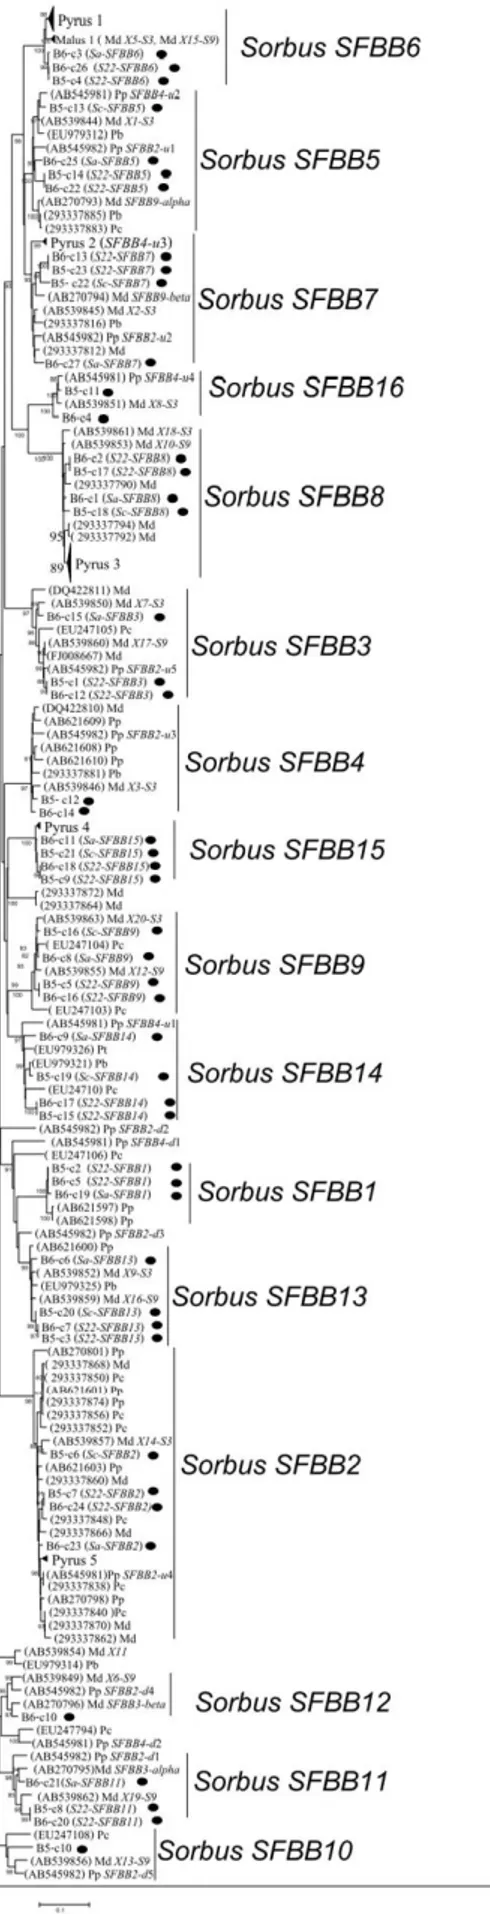 Figure 2-1: Maximum parsimony tree showing the relationship of the Pyrinae SFBB genes